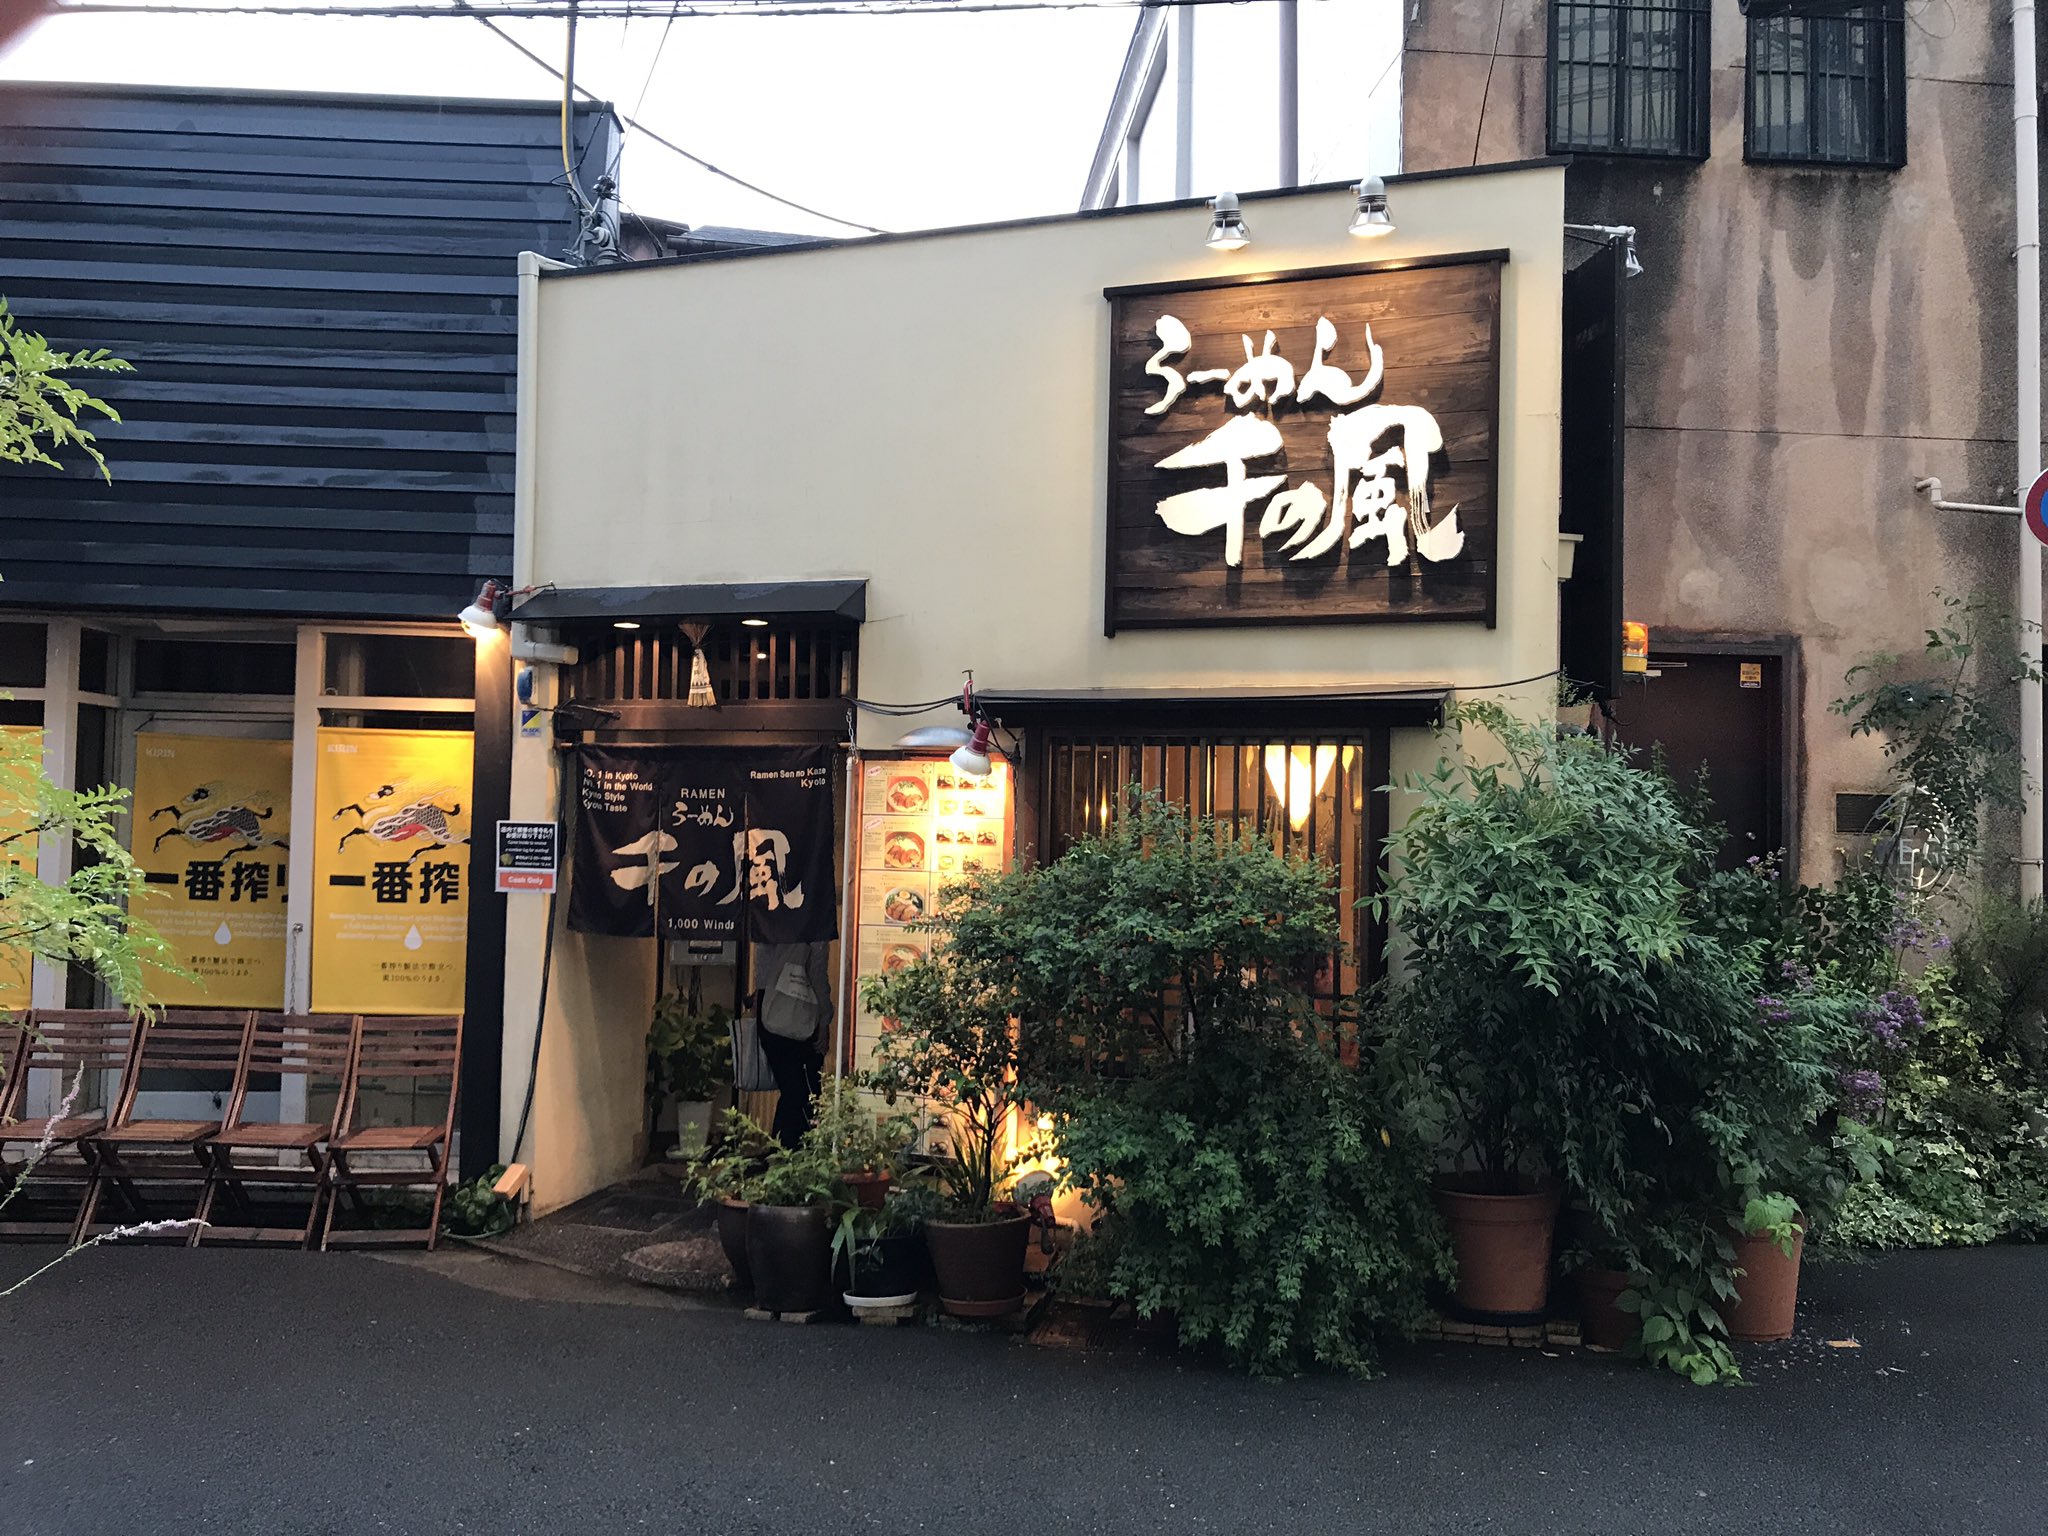 Dr. Jacob Dean on Twitter: ramen and shio ramen from last night's dinner at Ramen Sen no Kaze Winds). My wife's favorite bowl of ever #Kyoto #ramen https://t.co/kCPynideIT" /